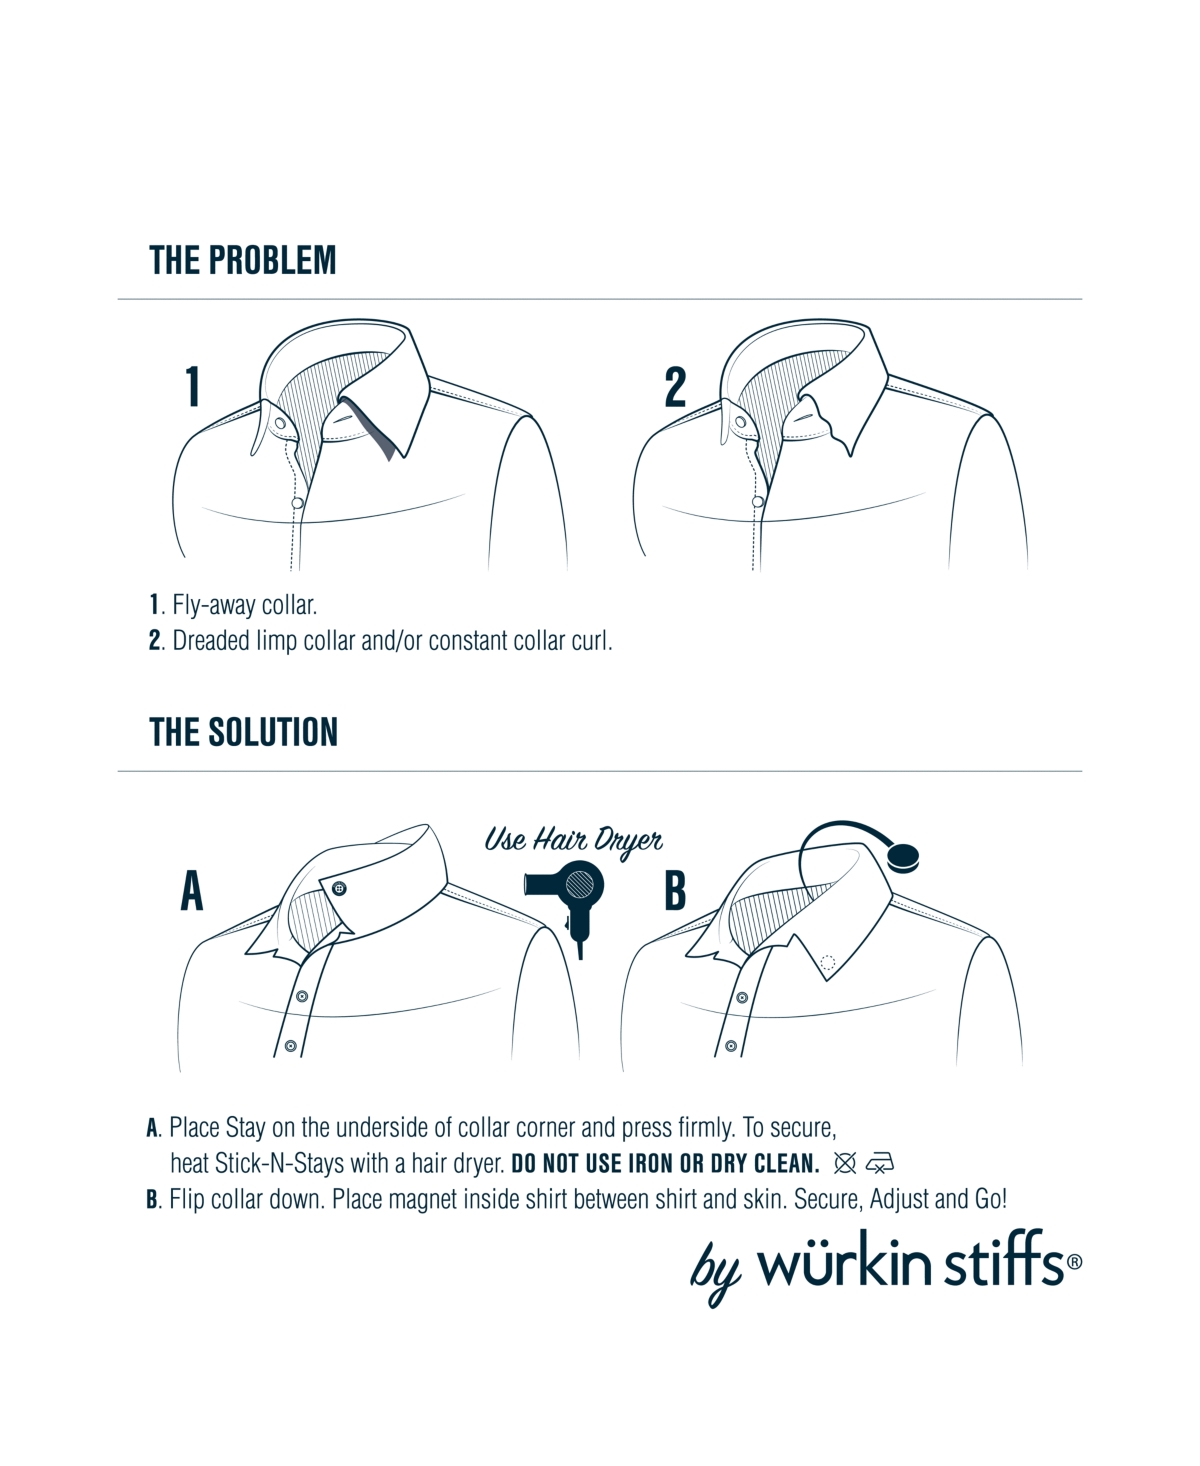 Würkin Stiffs Stick-N-Stays Polo Shirt Magnetic Collar Stays, Nordstrom